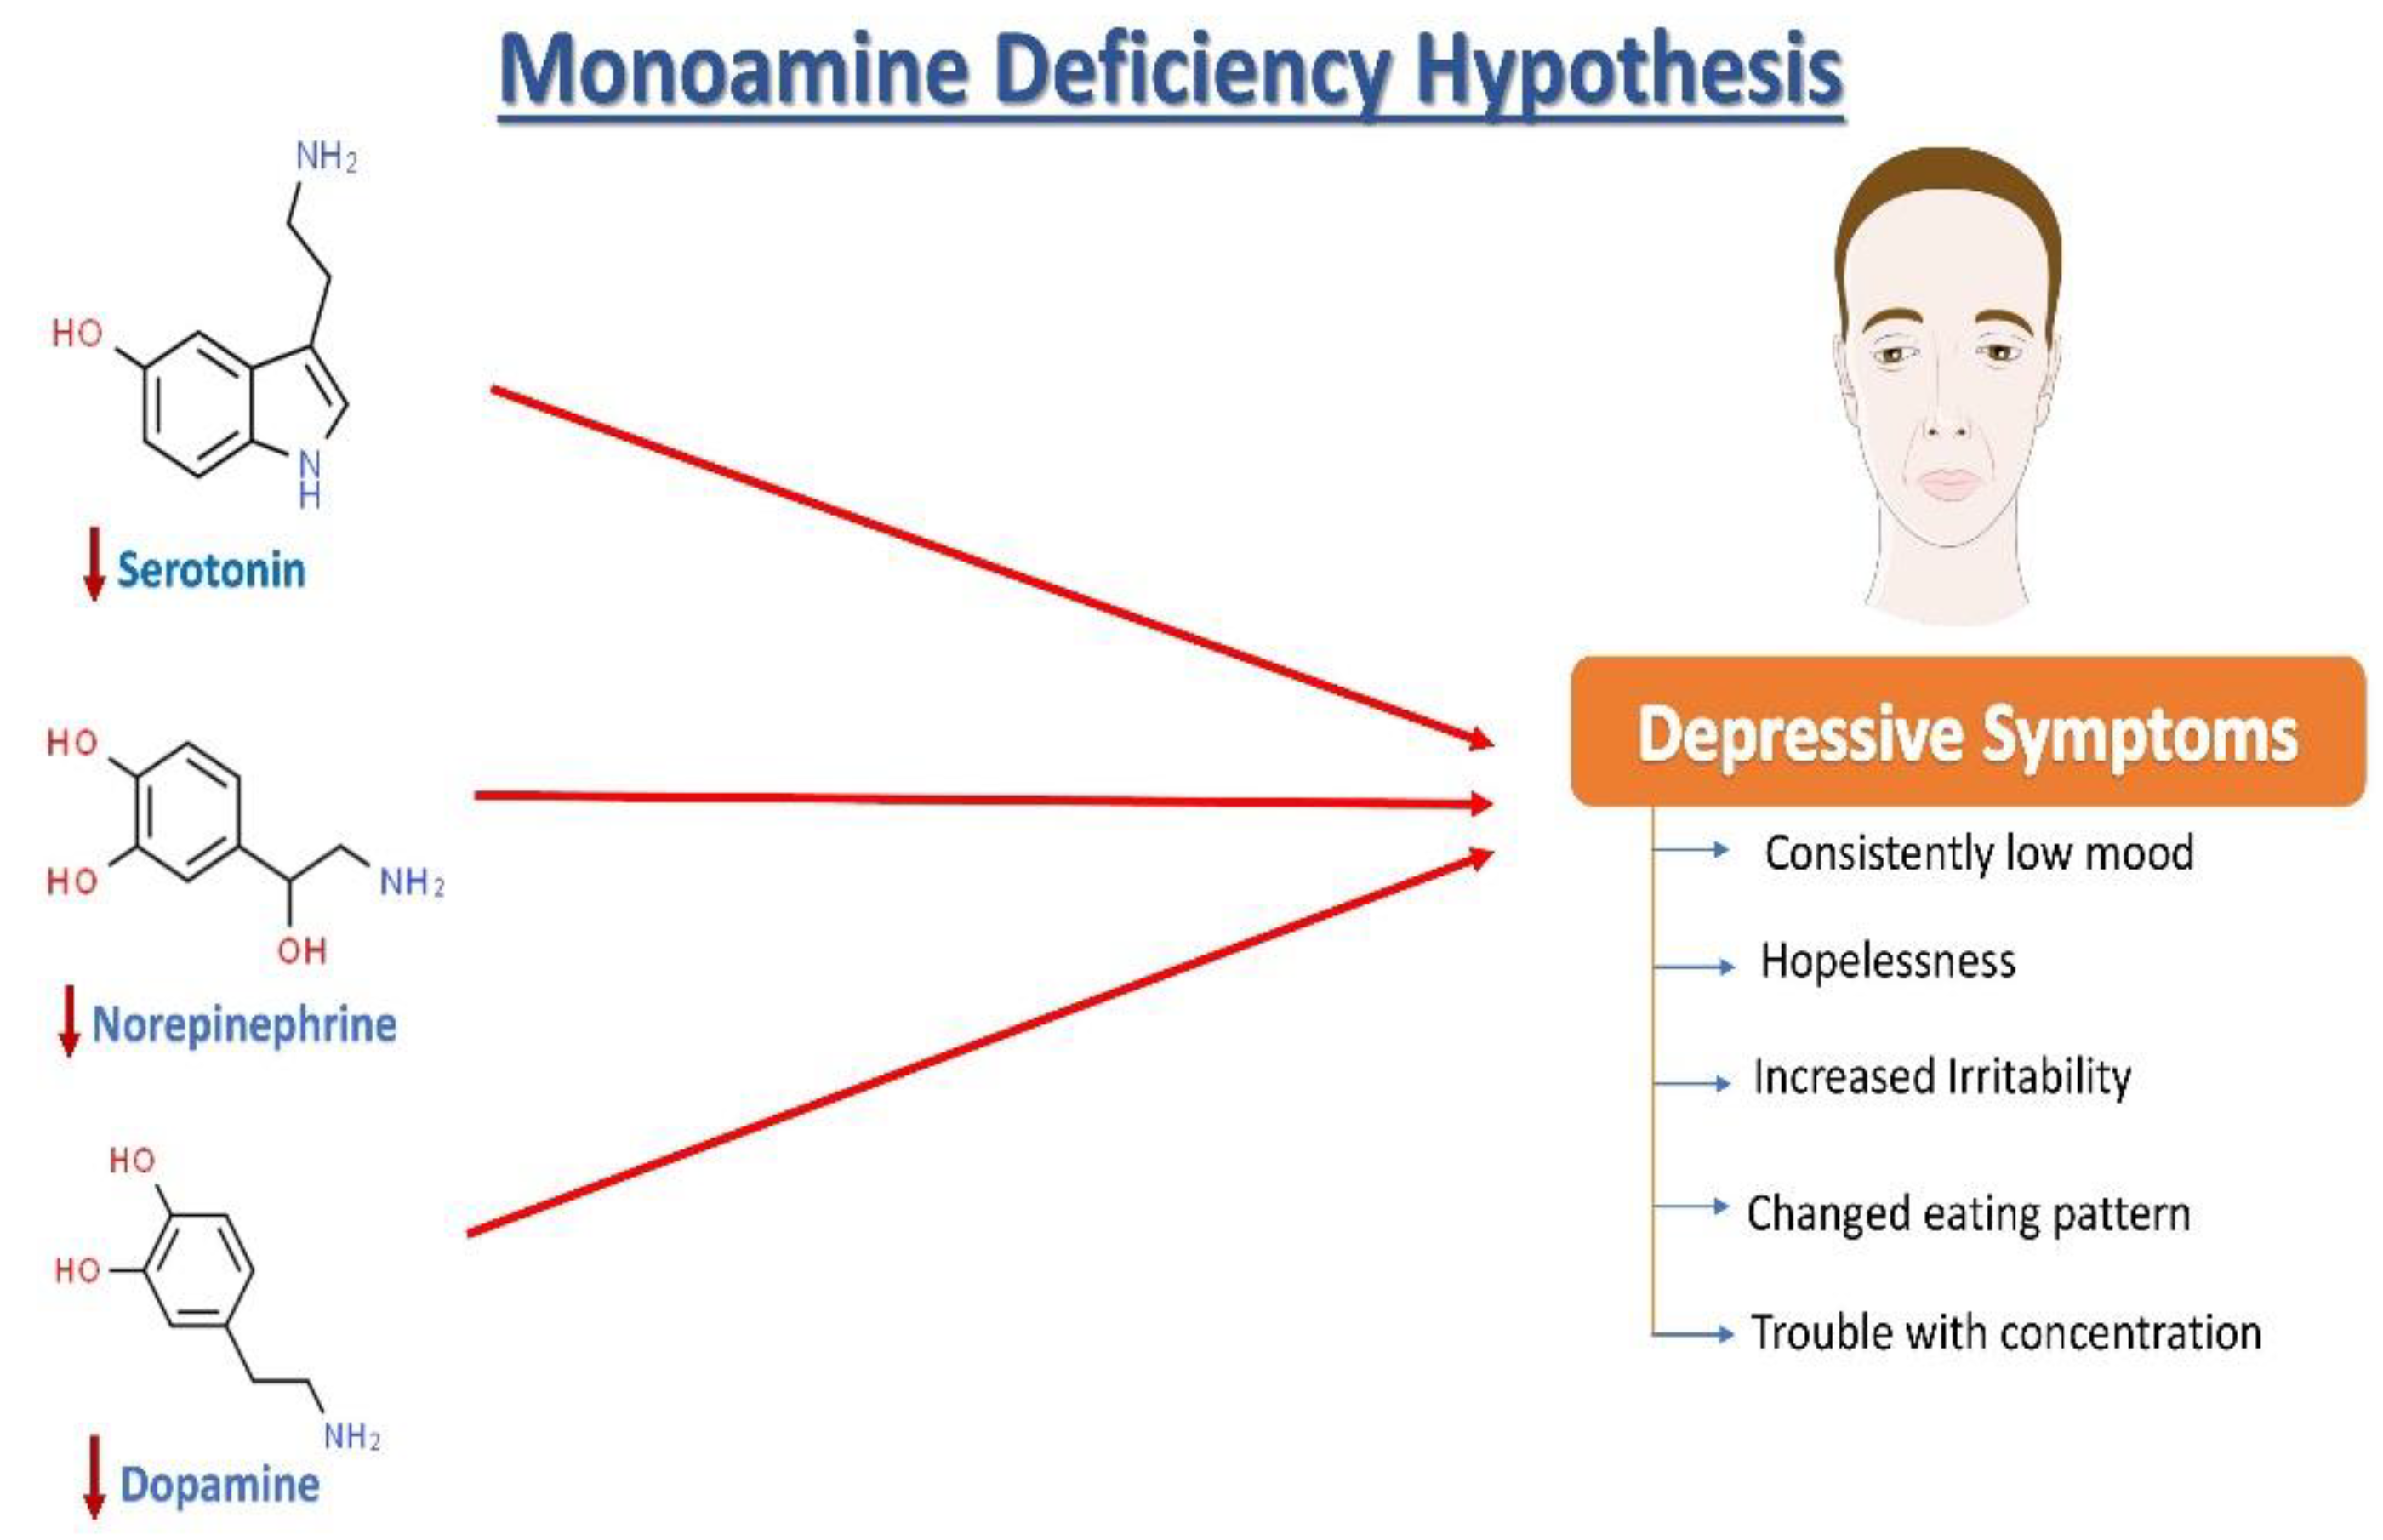 the monoamine hypothesis of depression states that